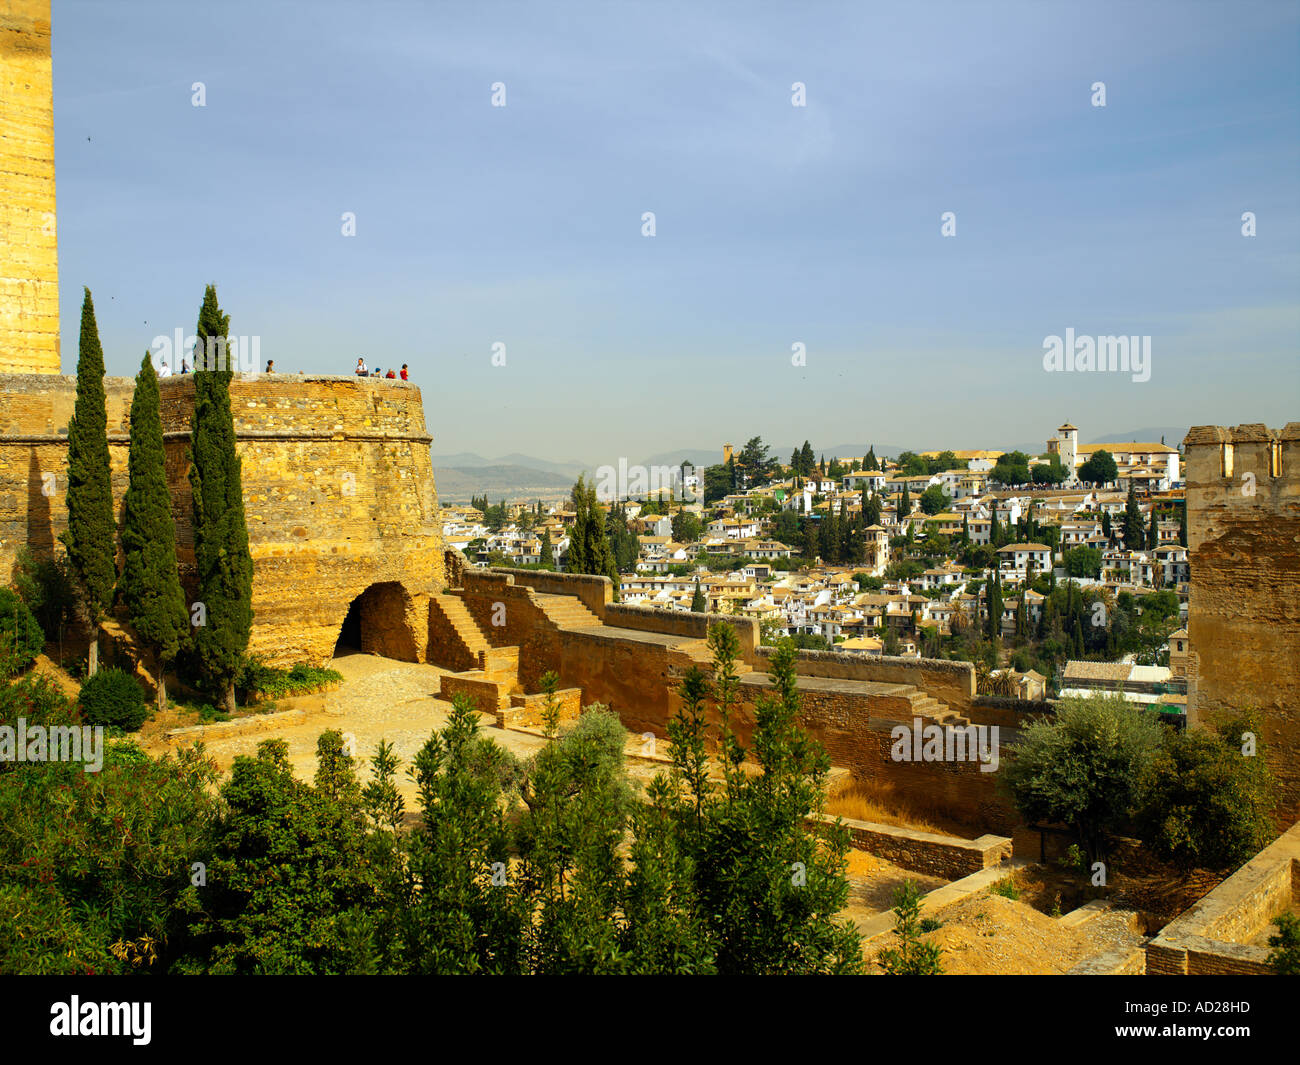 The Alcazar of Granada overlooking Albayzin Stock Photo